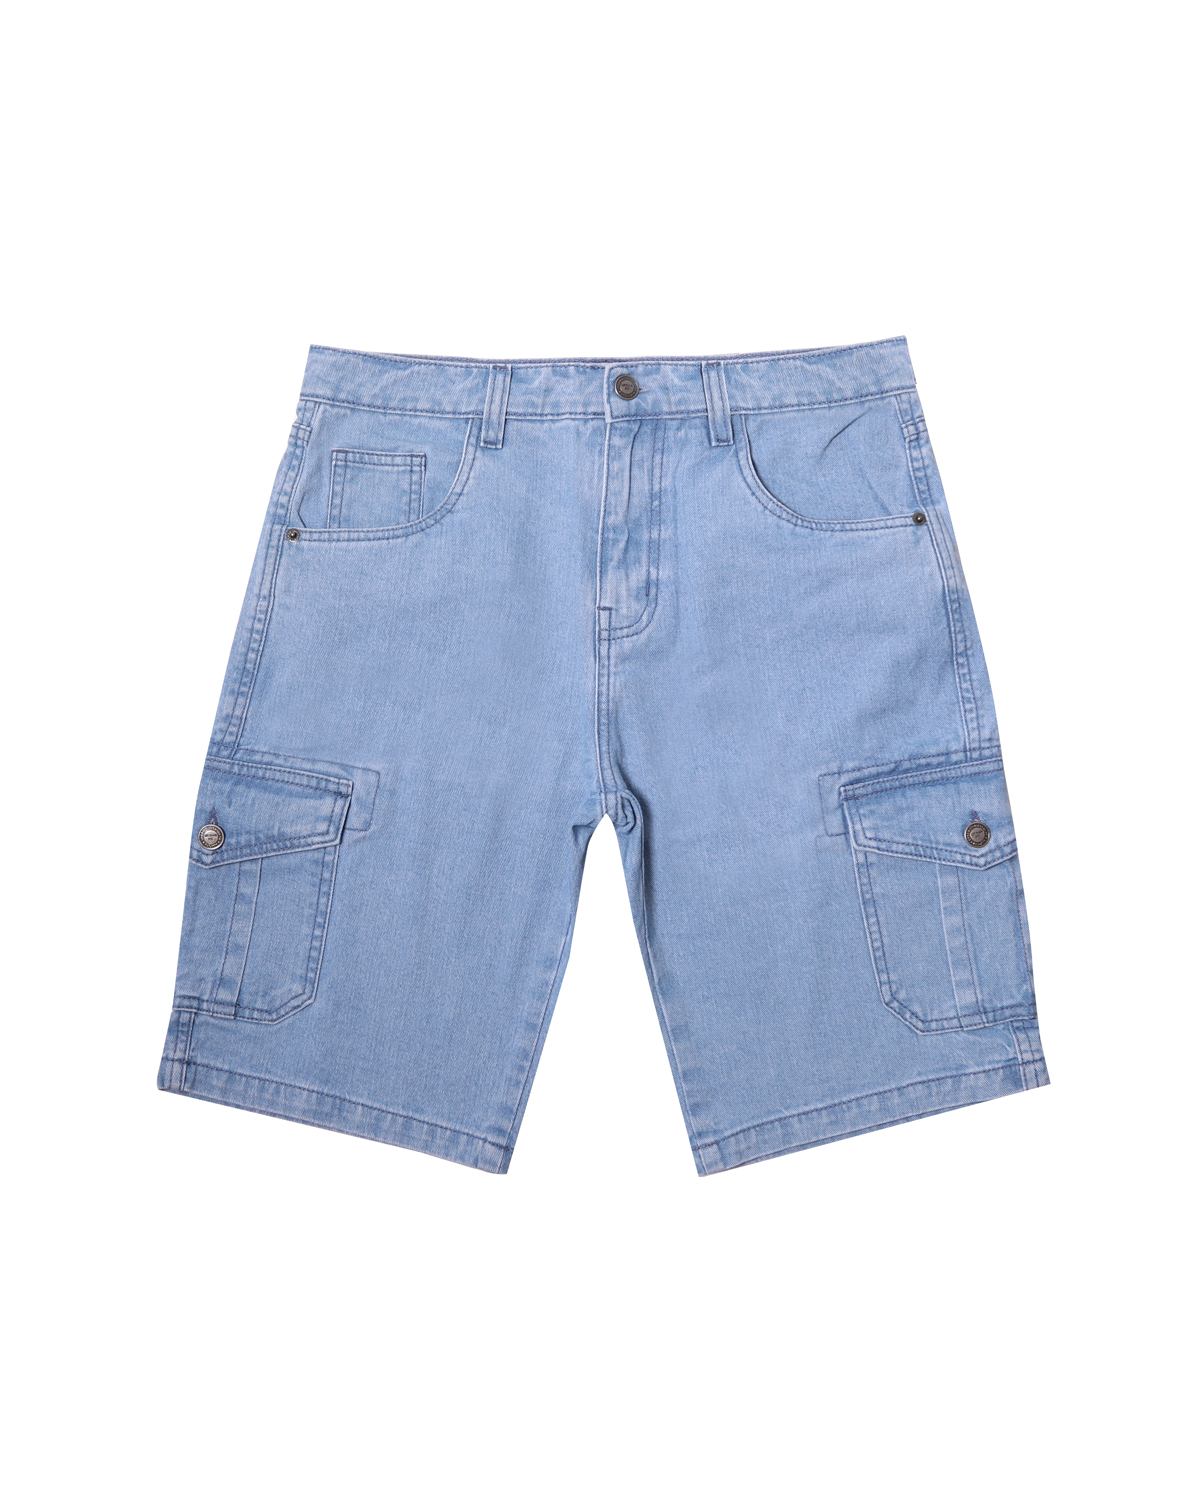 Sky Blue Denim Cargo Shorts -100% Cotton - UrbanFit Ltd